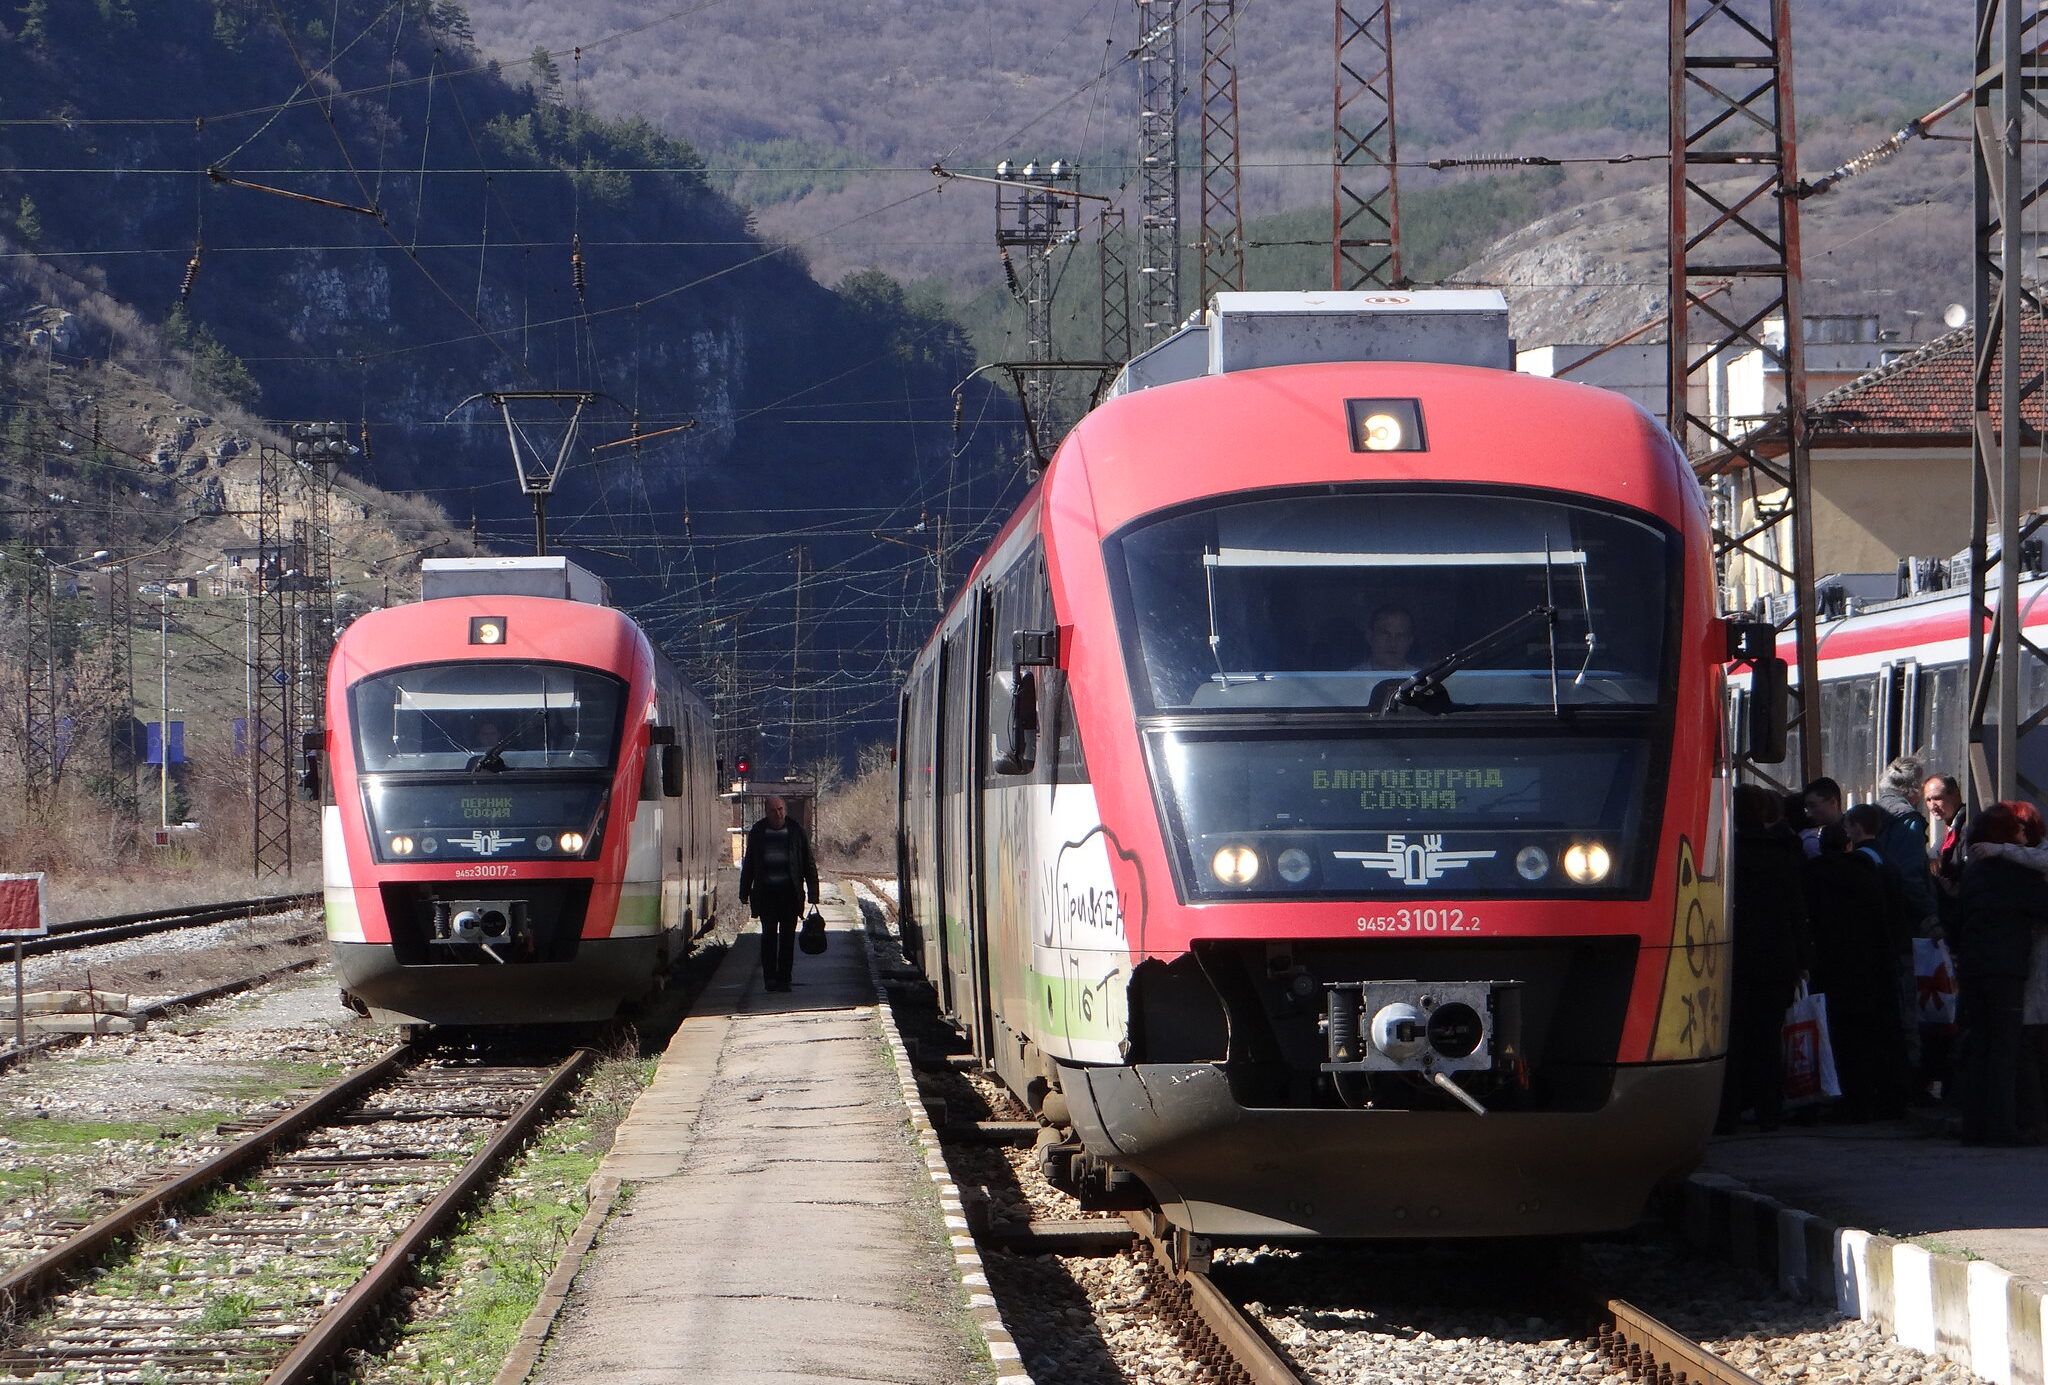 The Siemens Desiro trains on the BDZ network